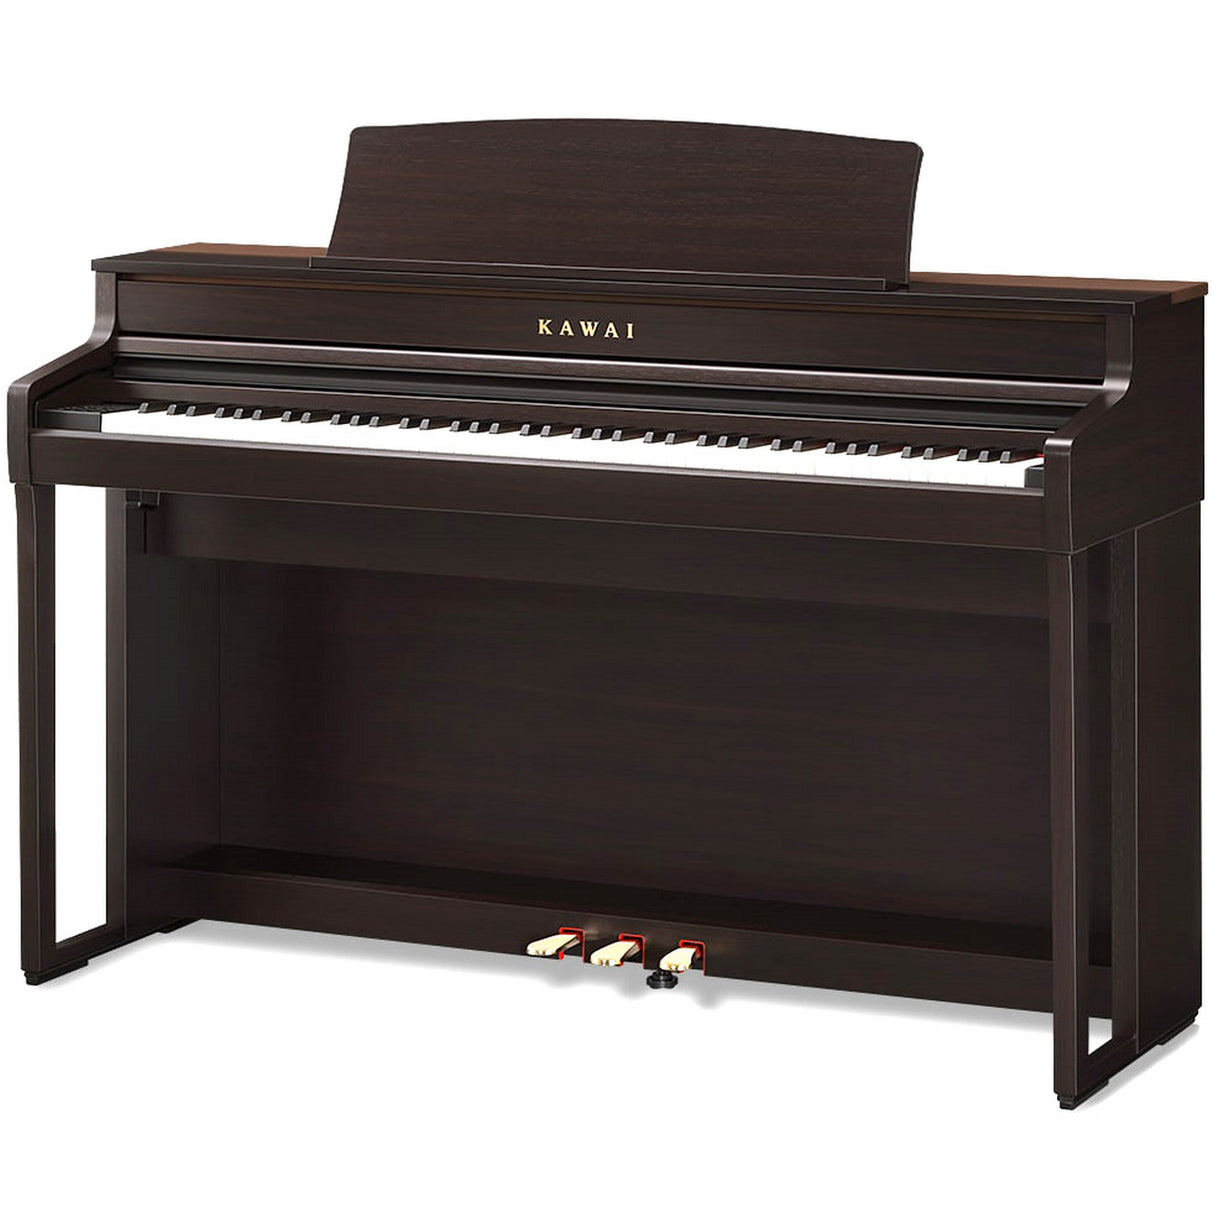 Kawai CA501 88-Key Compact Digital Piano with Bench, Rosewood